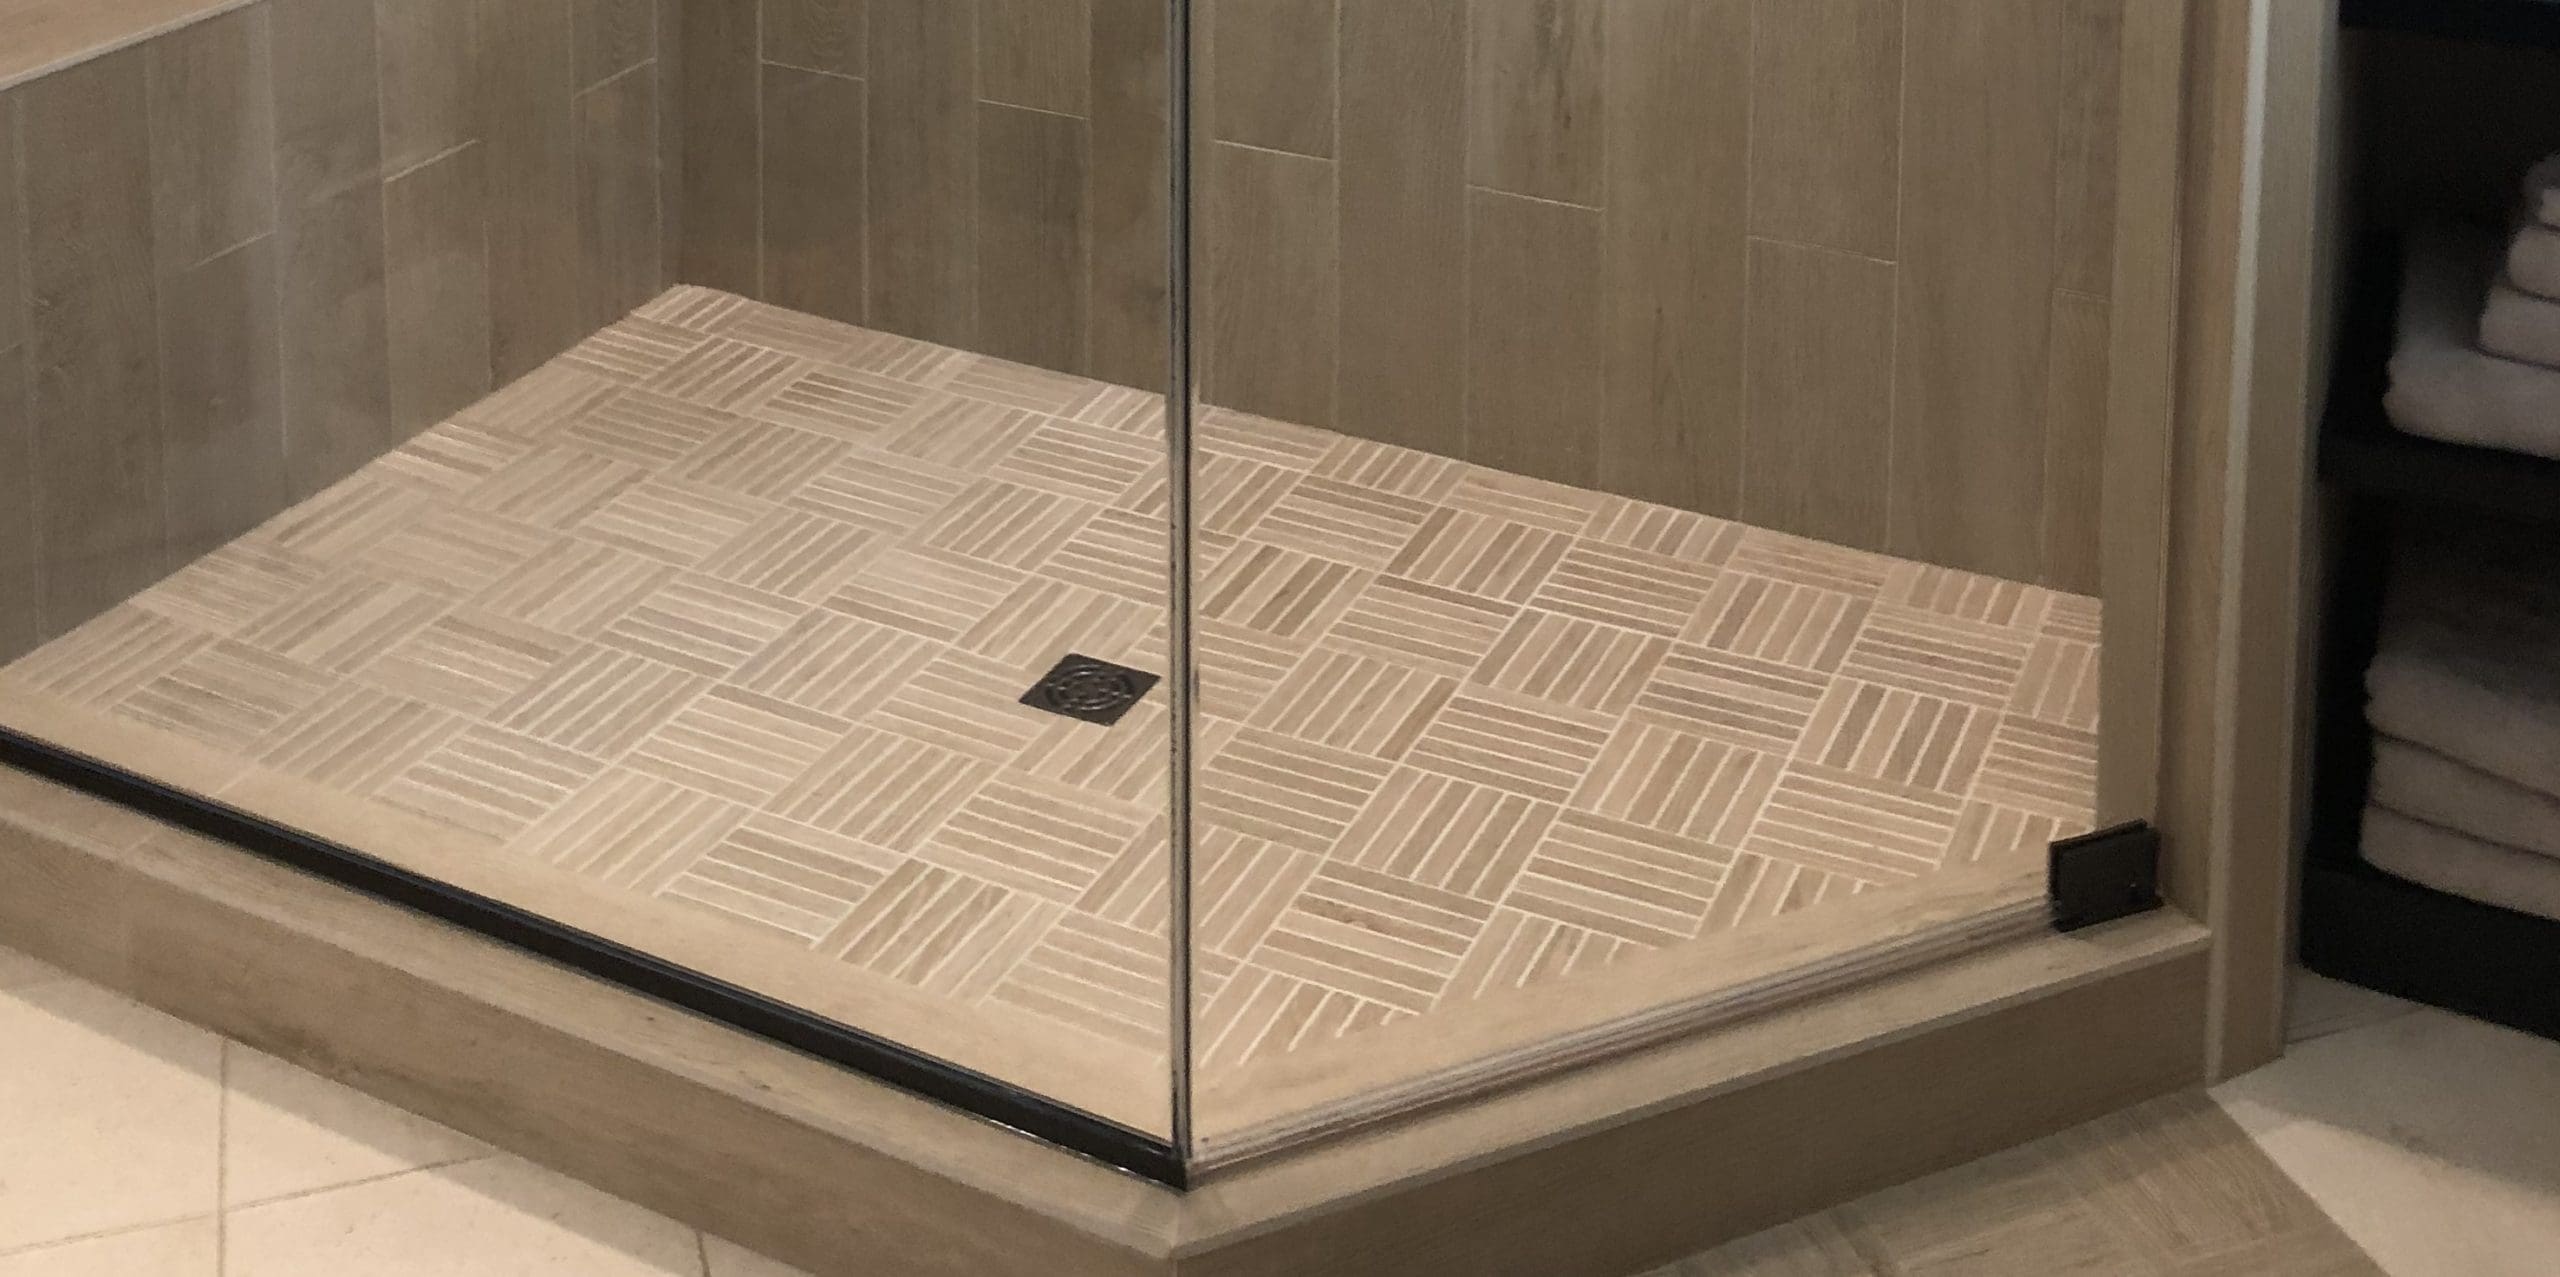 Shower Pans Tile Vs Solid Surface, How To Make A Tile Shower Floor Pan